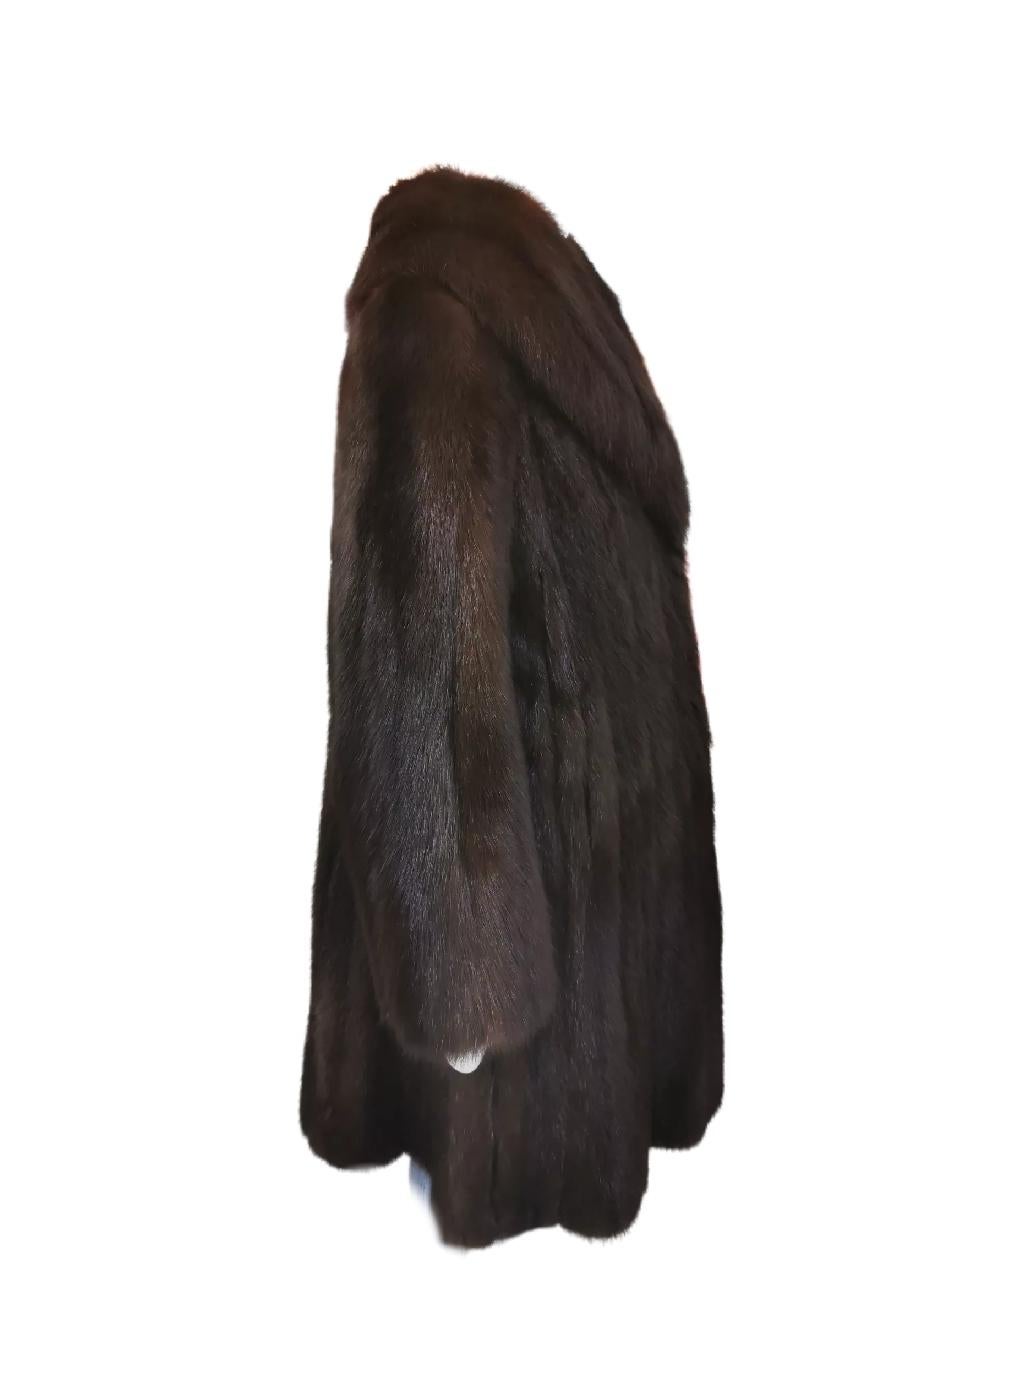 sable mink coat value